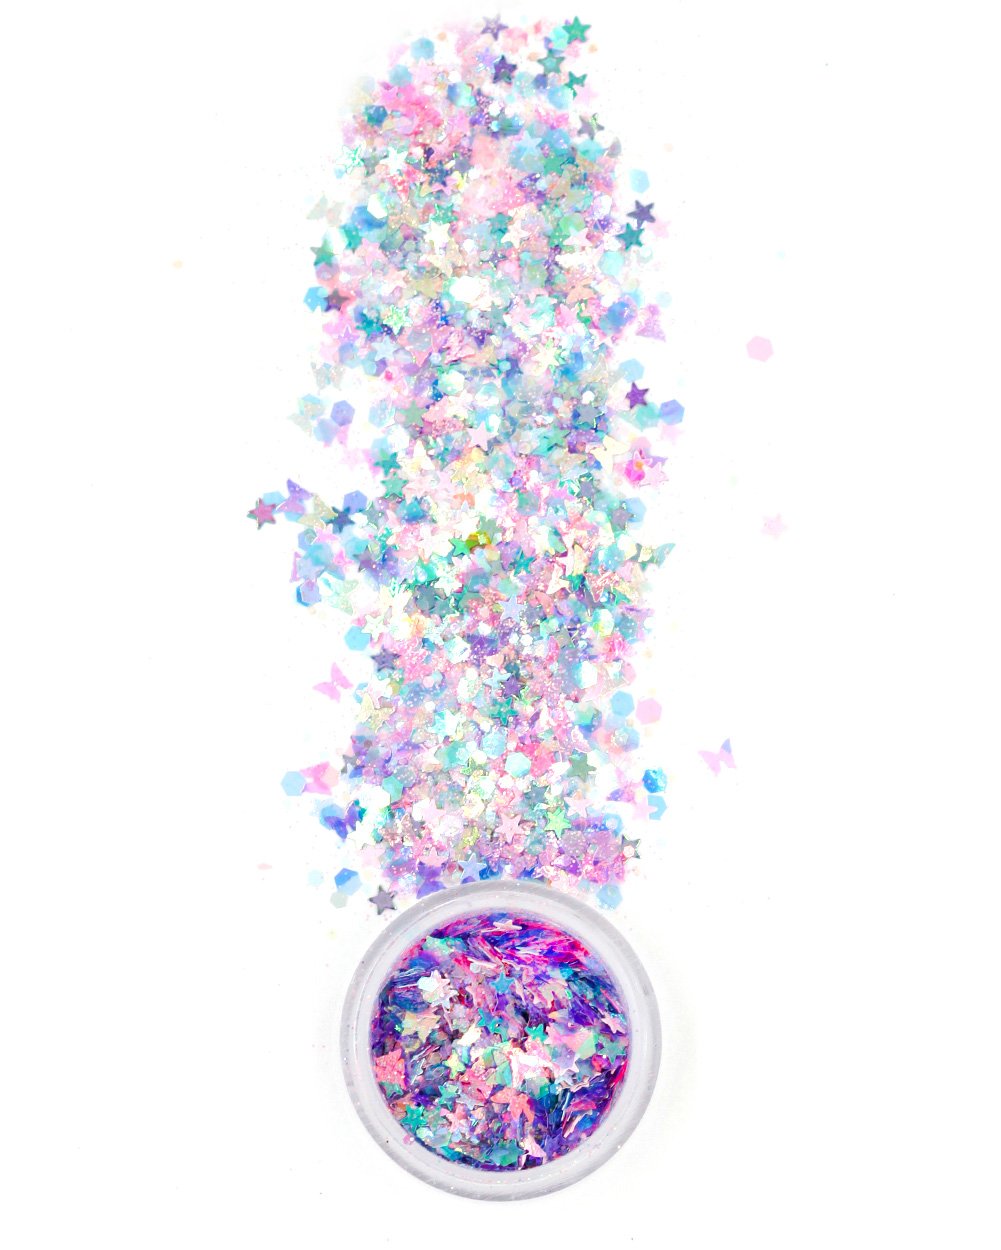 Lunautics Cosmic Galaxy Glitter-Spill